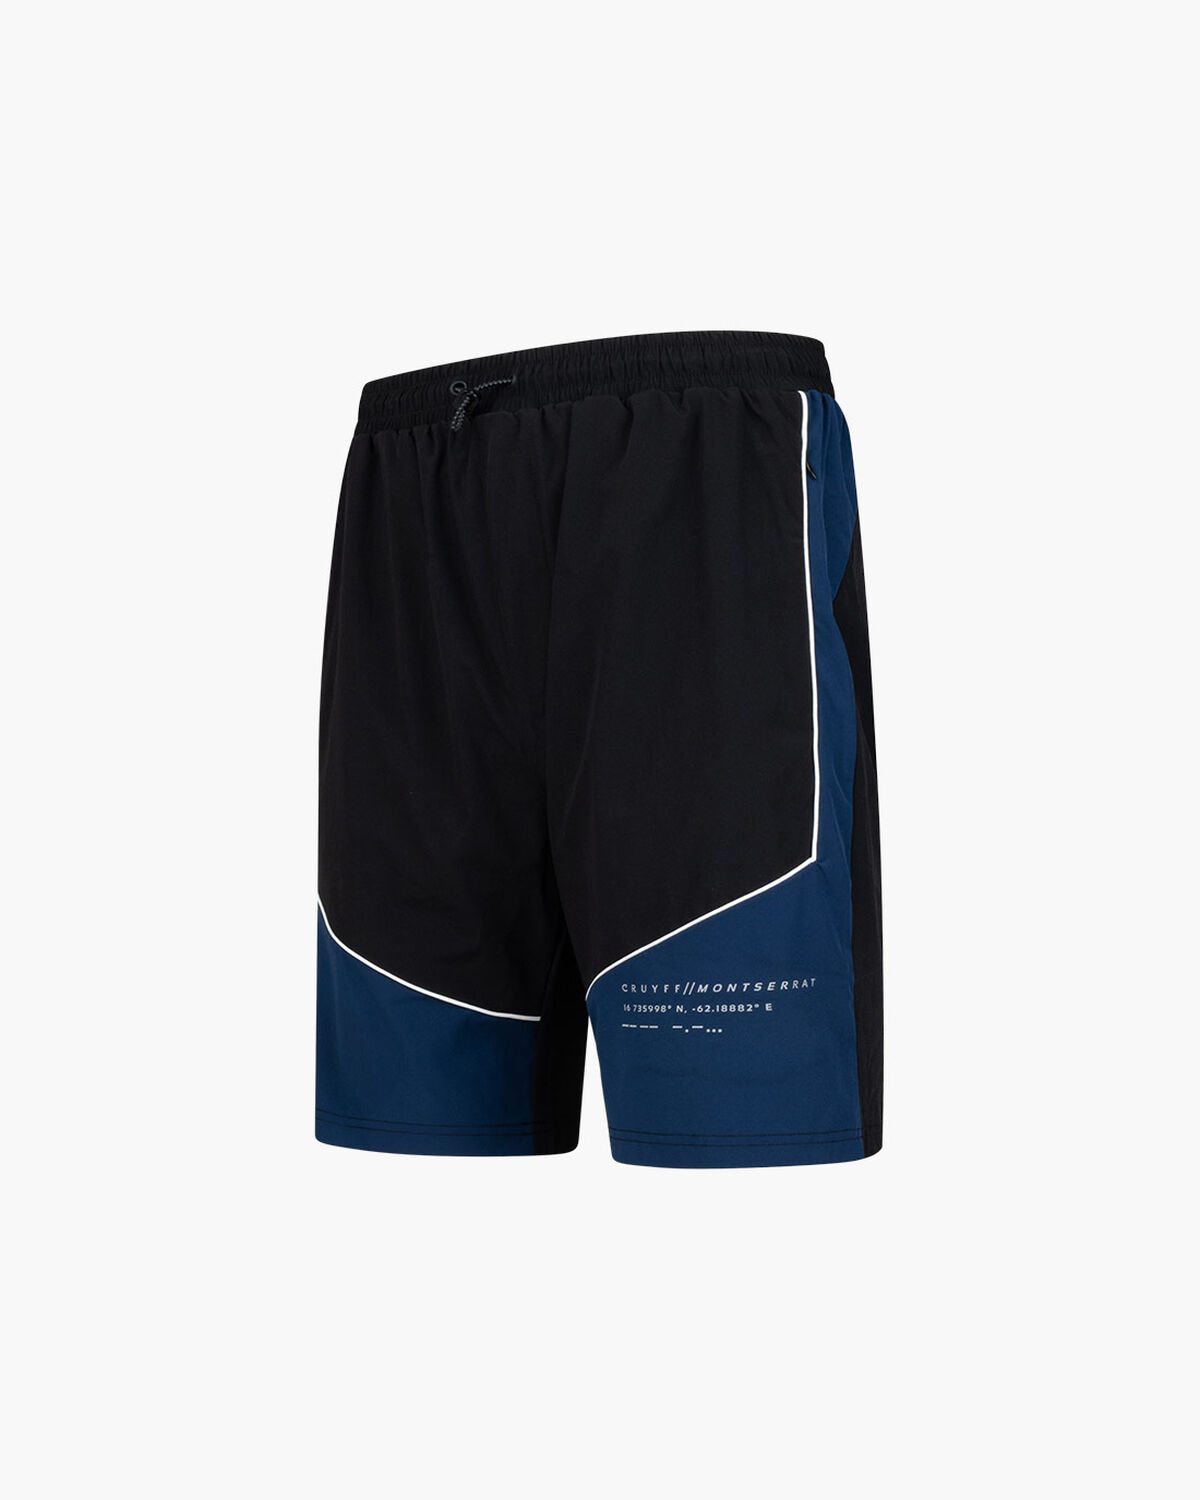 Monsterrat Salvador Shorts - 95%Nylon 5%Elastane, Blue/Black, hi-res